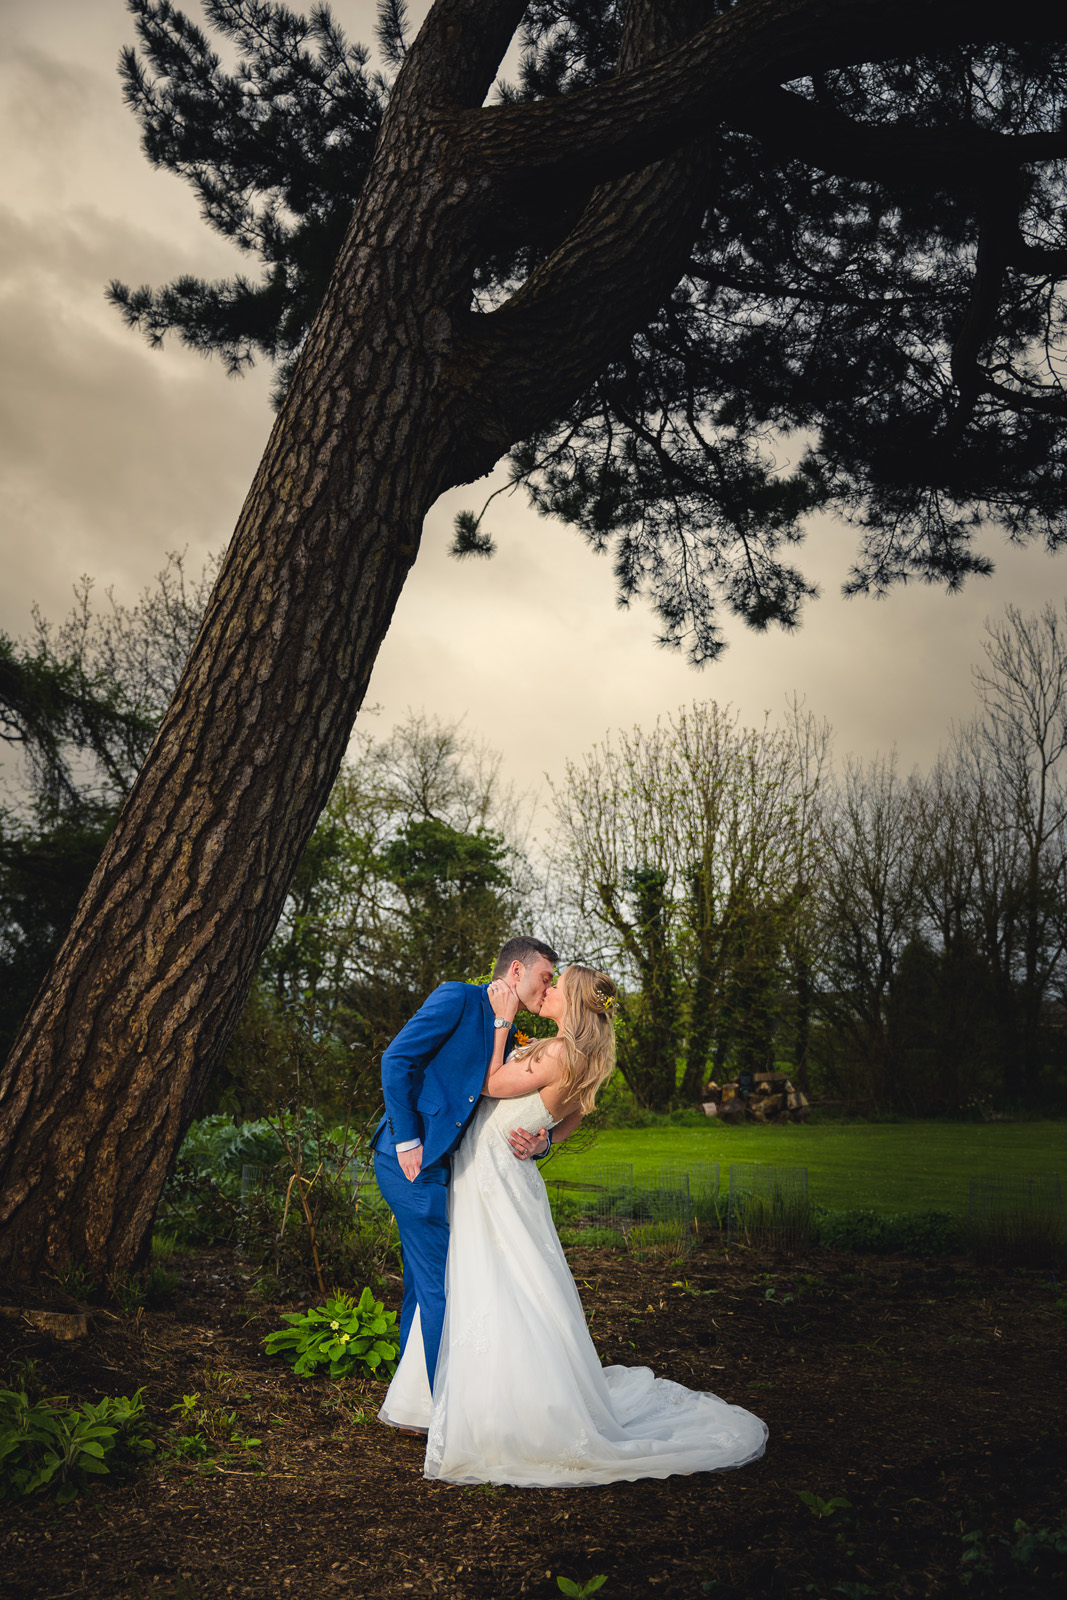 Wedding Photographer Bristol at Berwick Lodge